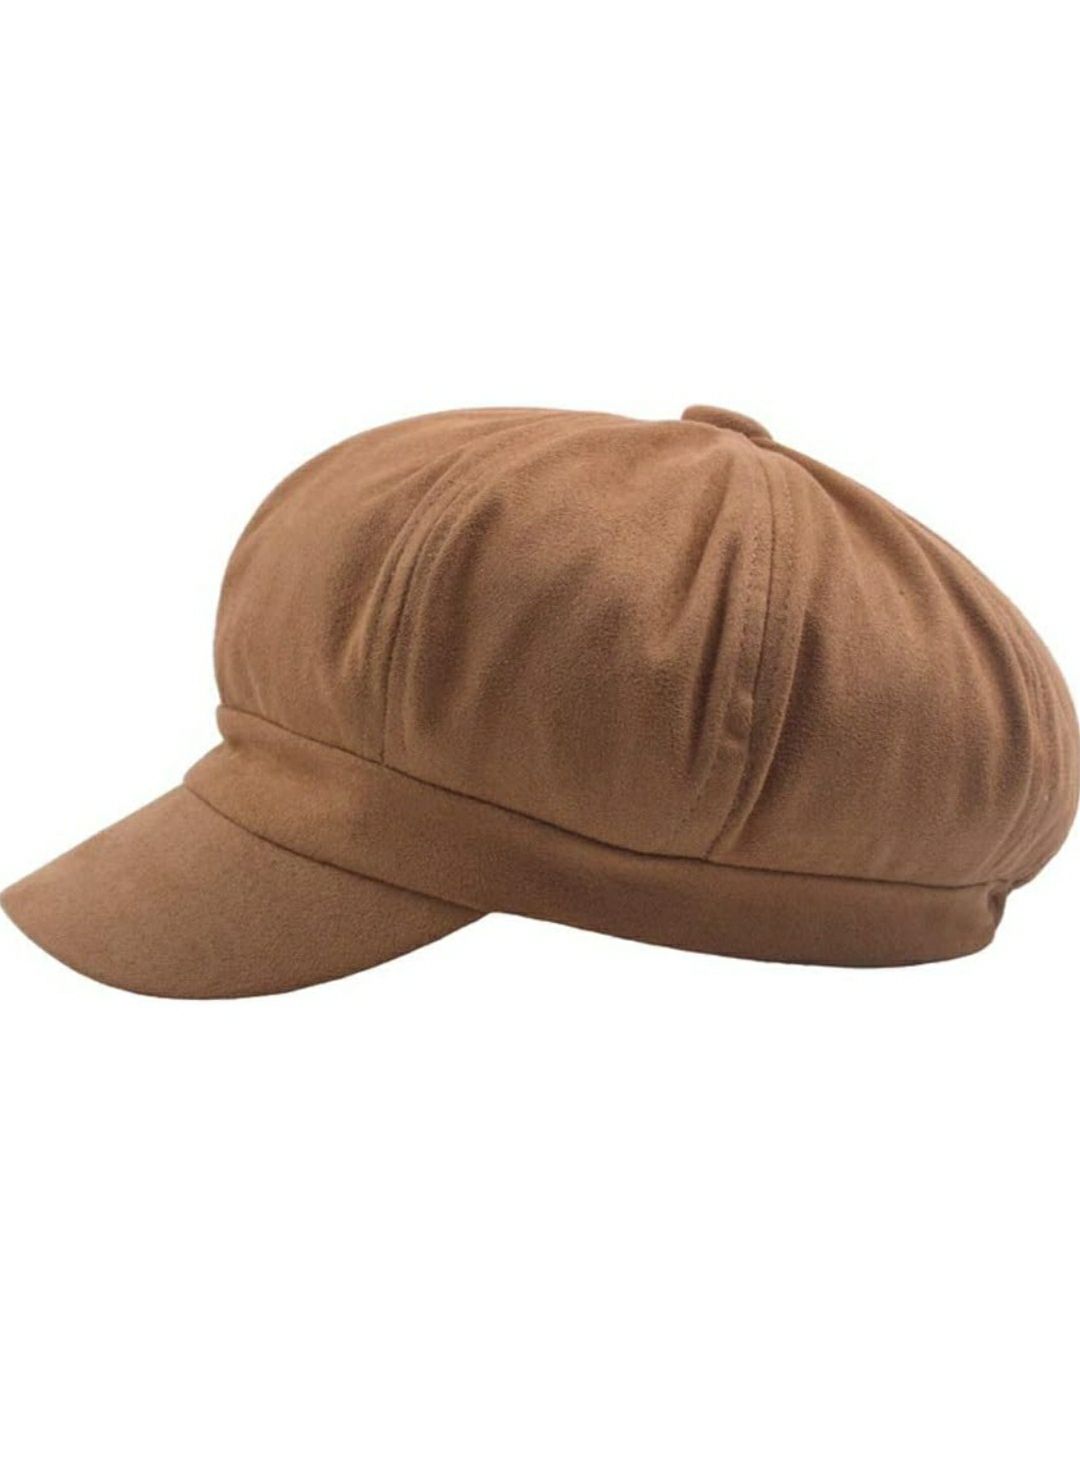 Czapki i kapelusze hipster wełniany beret czapka, ucho męs